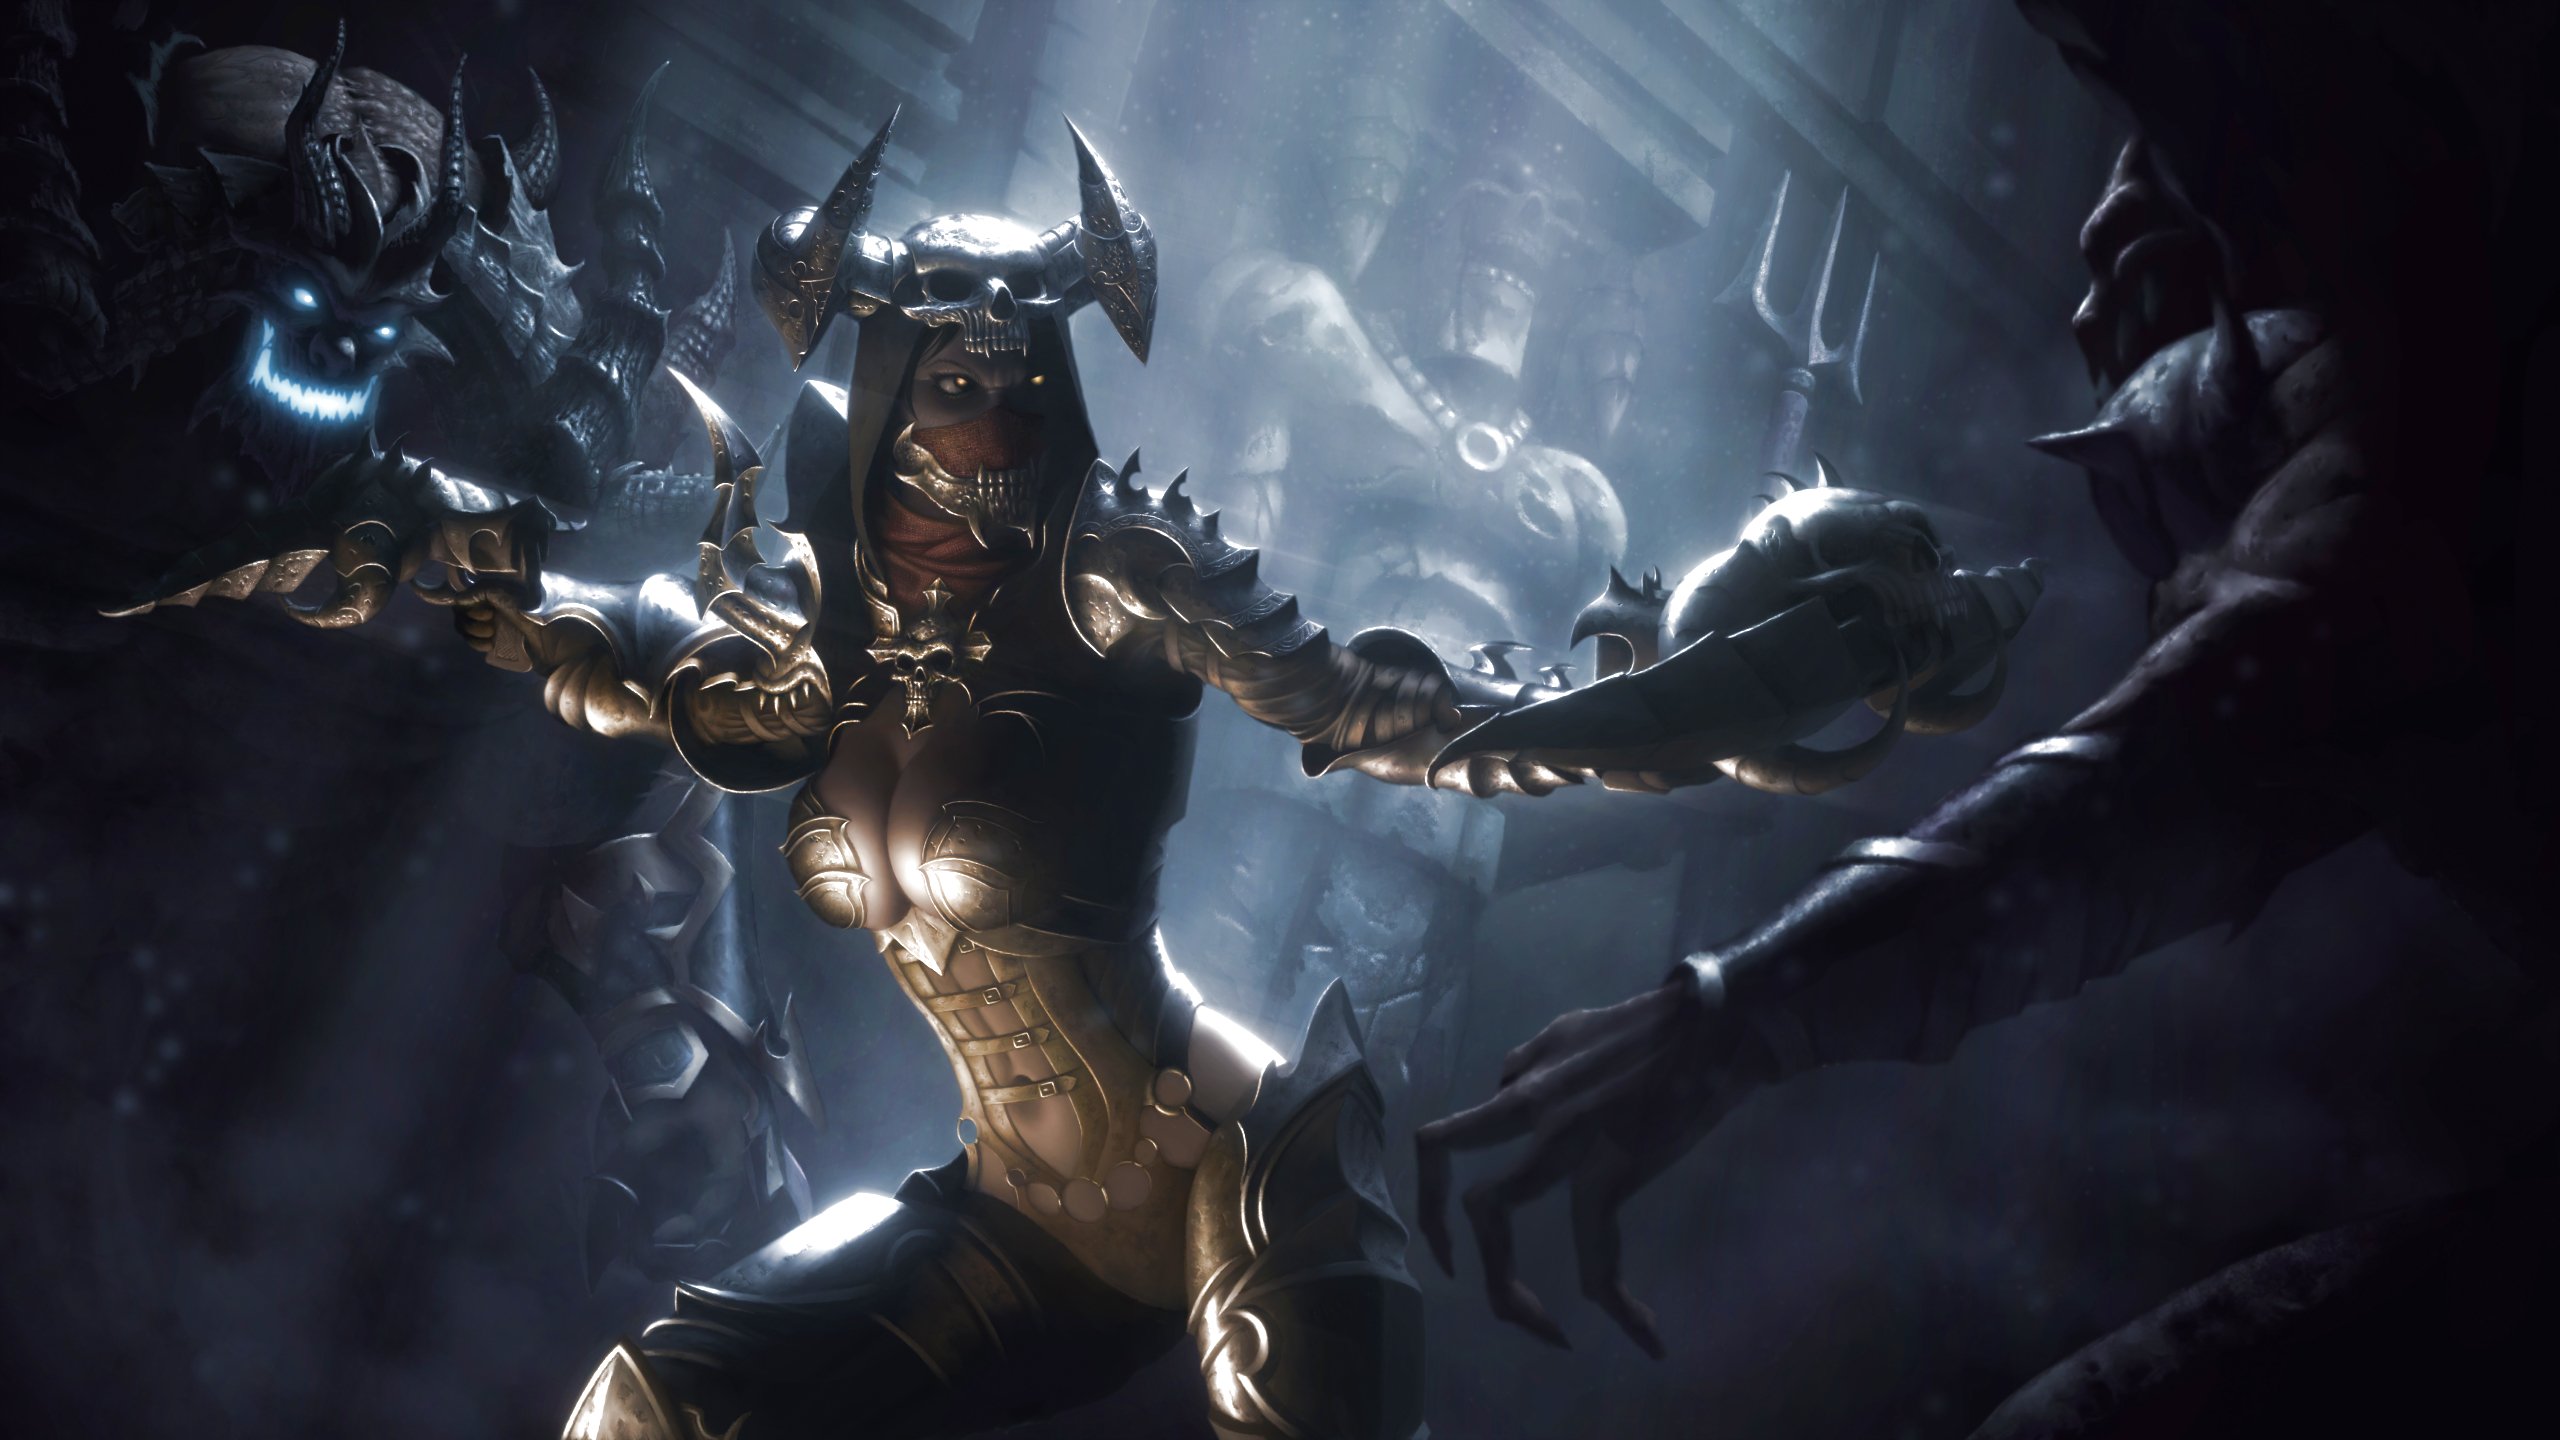 Diablo Dark Fantasy Warrior Rpg Action Fighting Dungeon Wallpapers Hd Desktop And Mobile Backgrounds